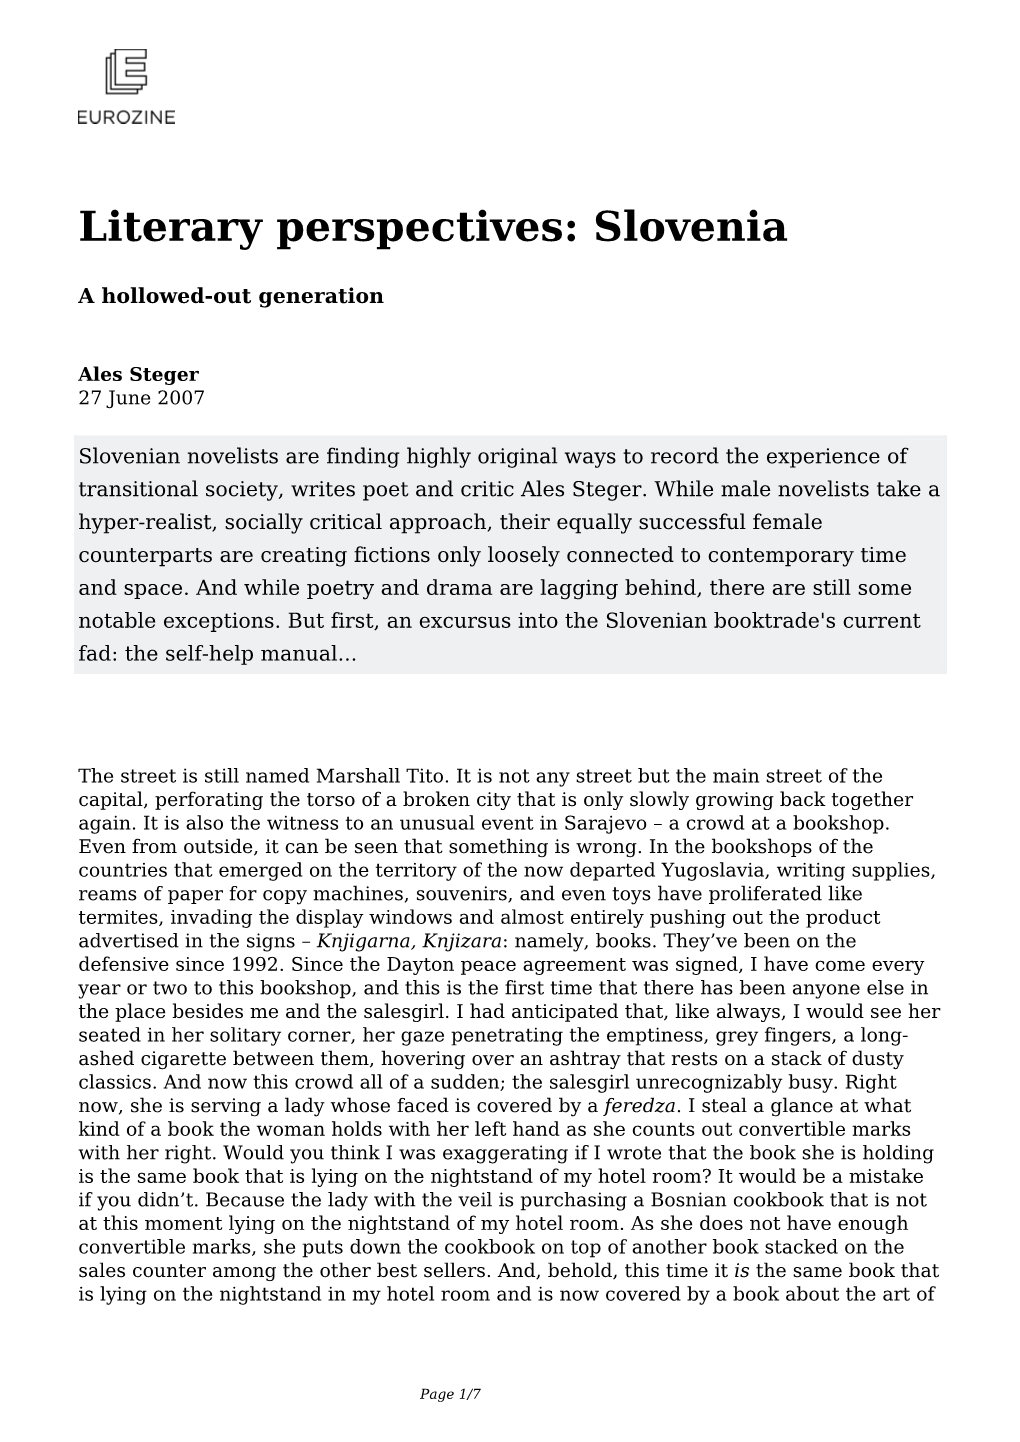 Literary Perspectives: Slovenia